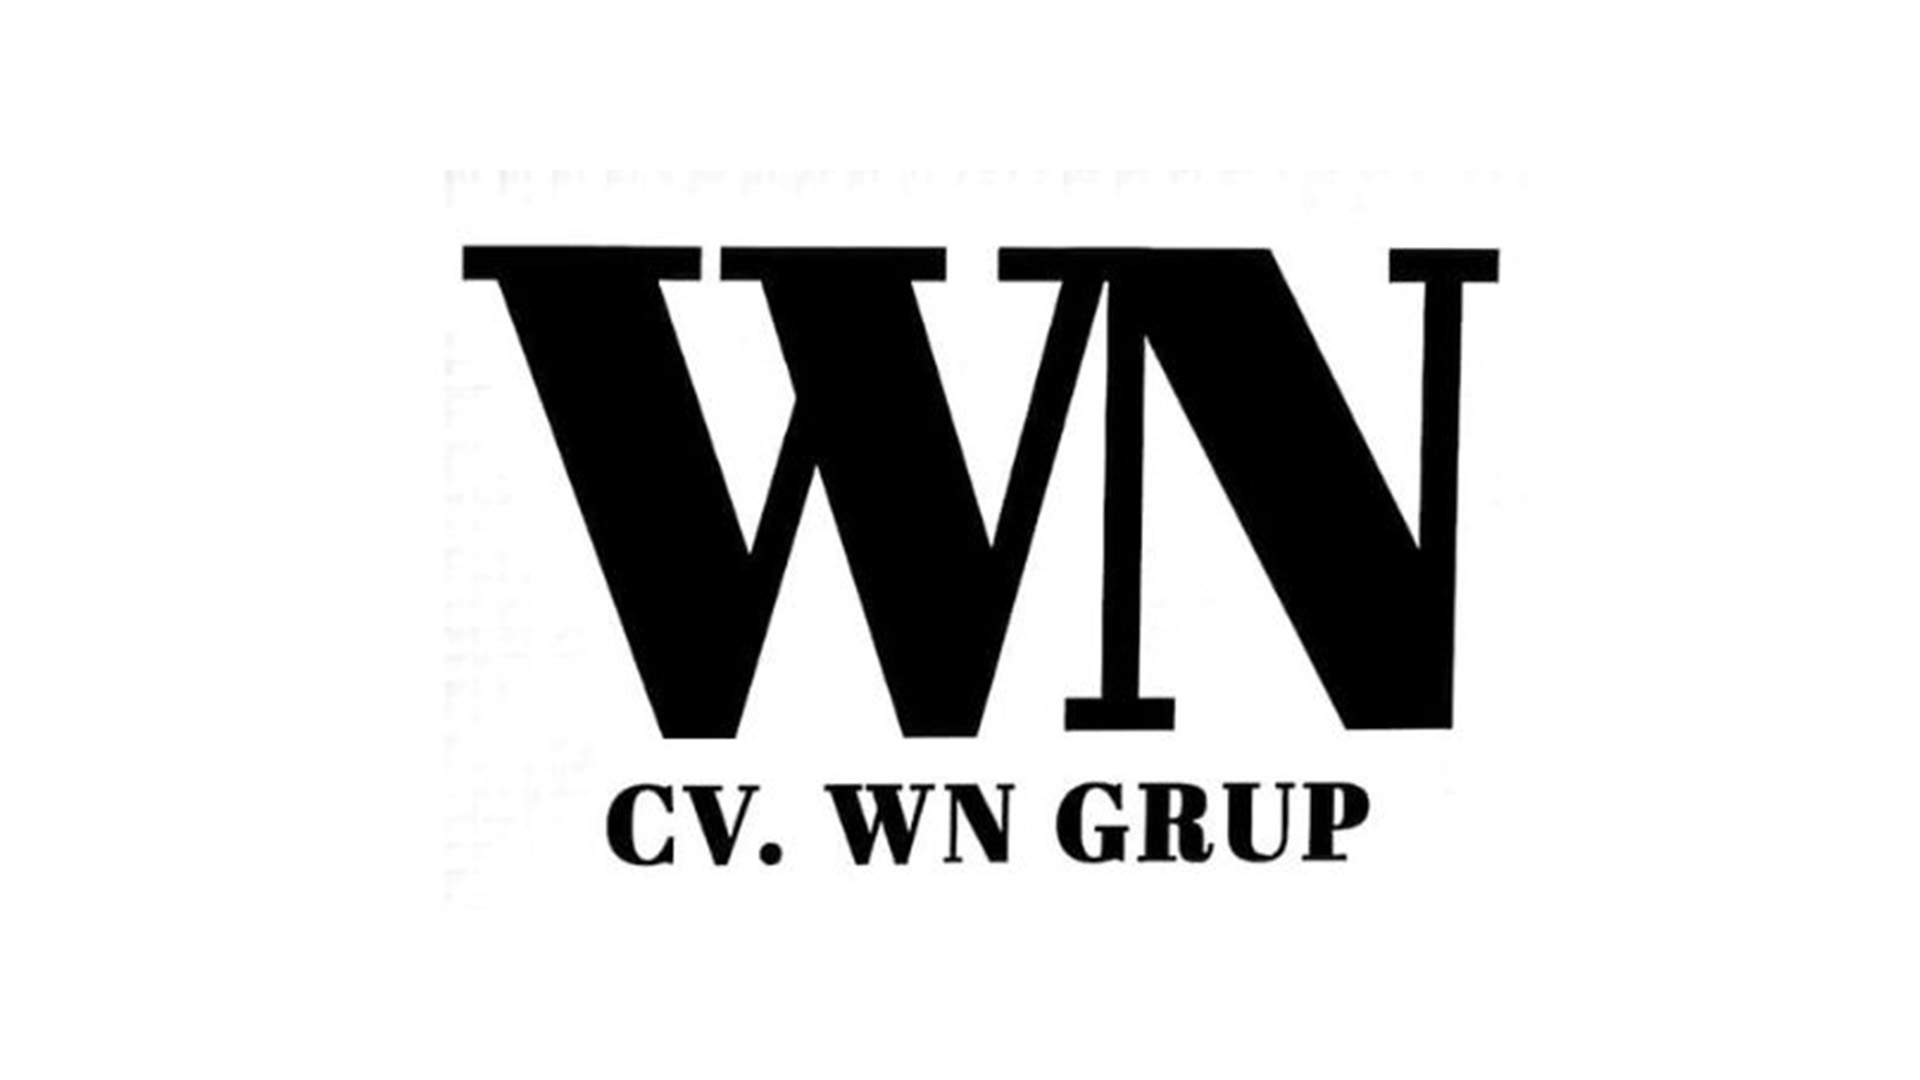 image-cv-wn-grup